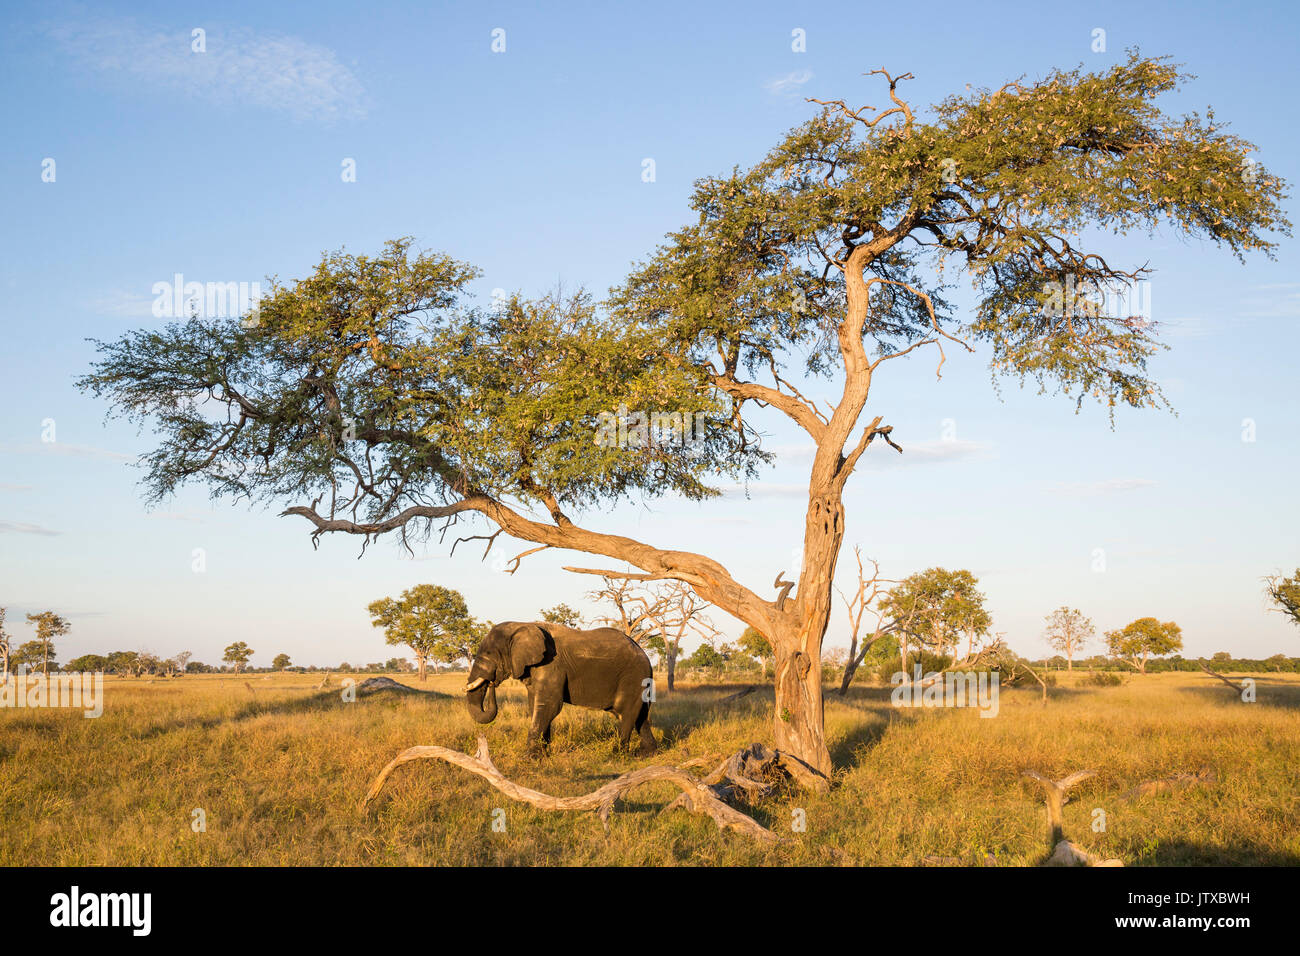 Lone elefante africano (Loxodonta africana) bull alimentazione su i baccelli di un albero camelthorn (Acacia erioloba) su una prateria aperta pianura Foto Stock